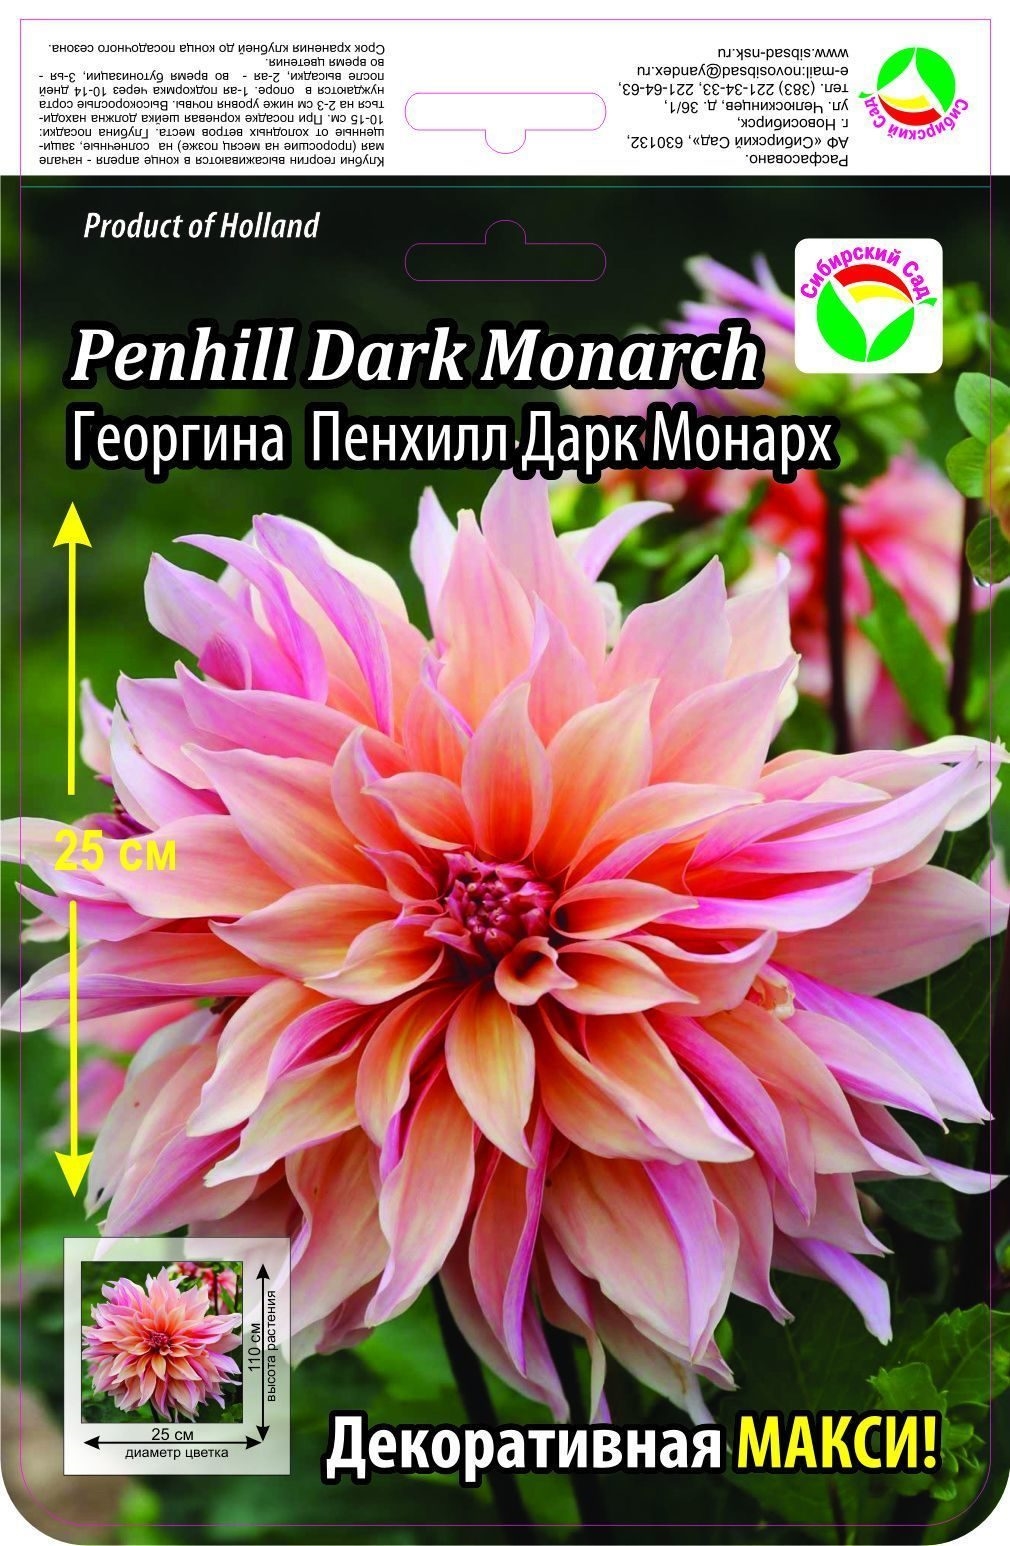 Георгин дарк. Penhill Dark Monarch георгин. Penhill Dark Monarch георгины.